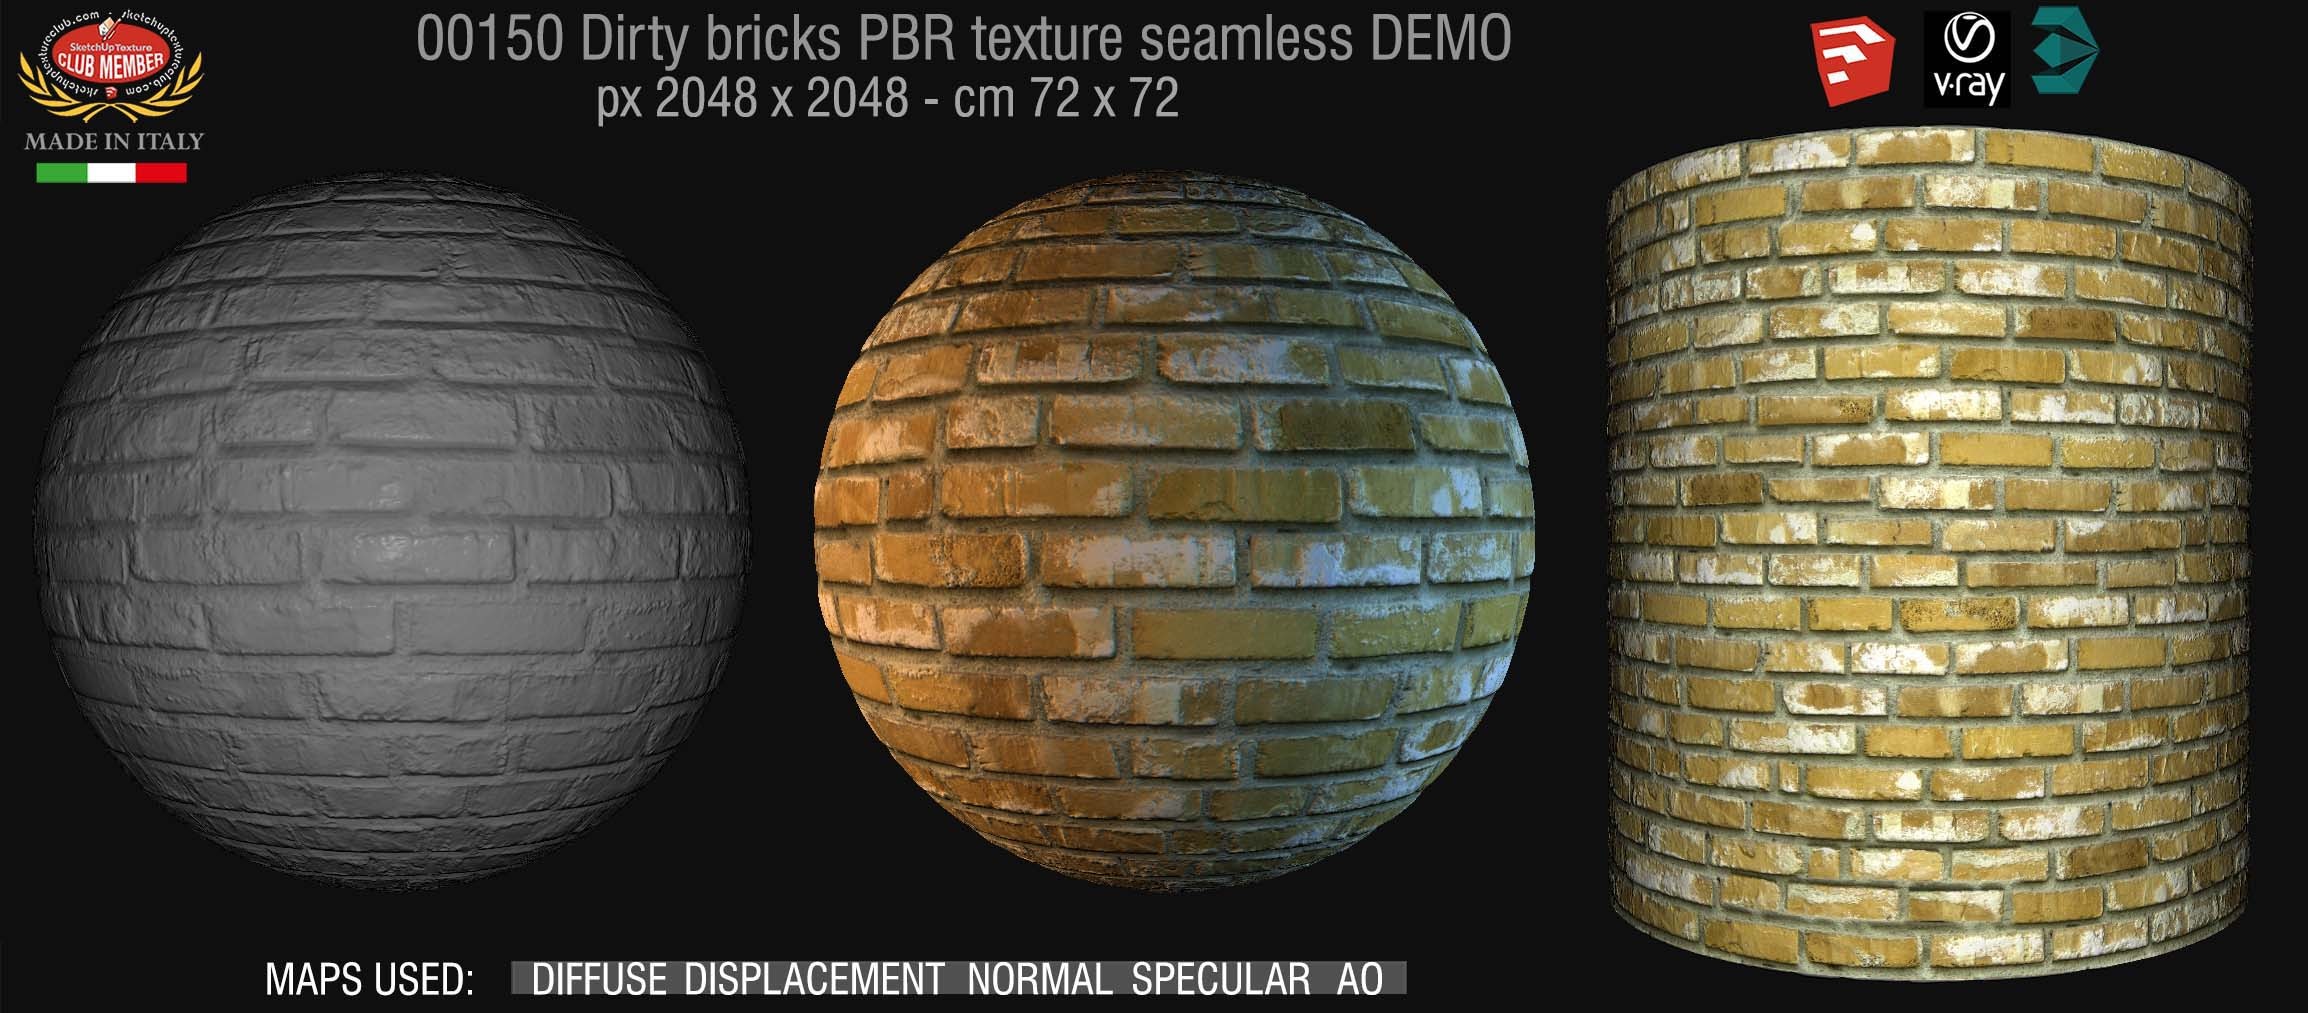 00150 Dirty bricks PBR texture seamless DEMO